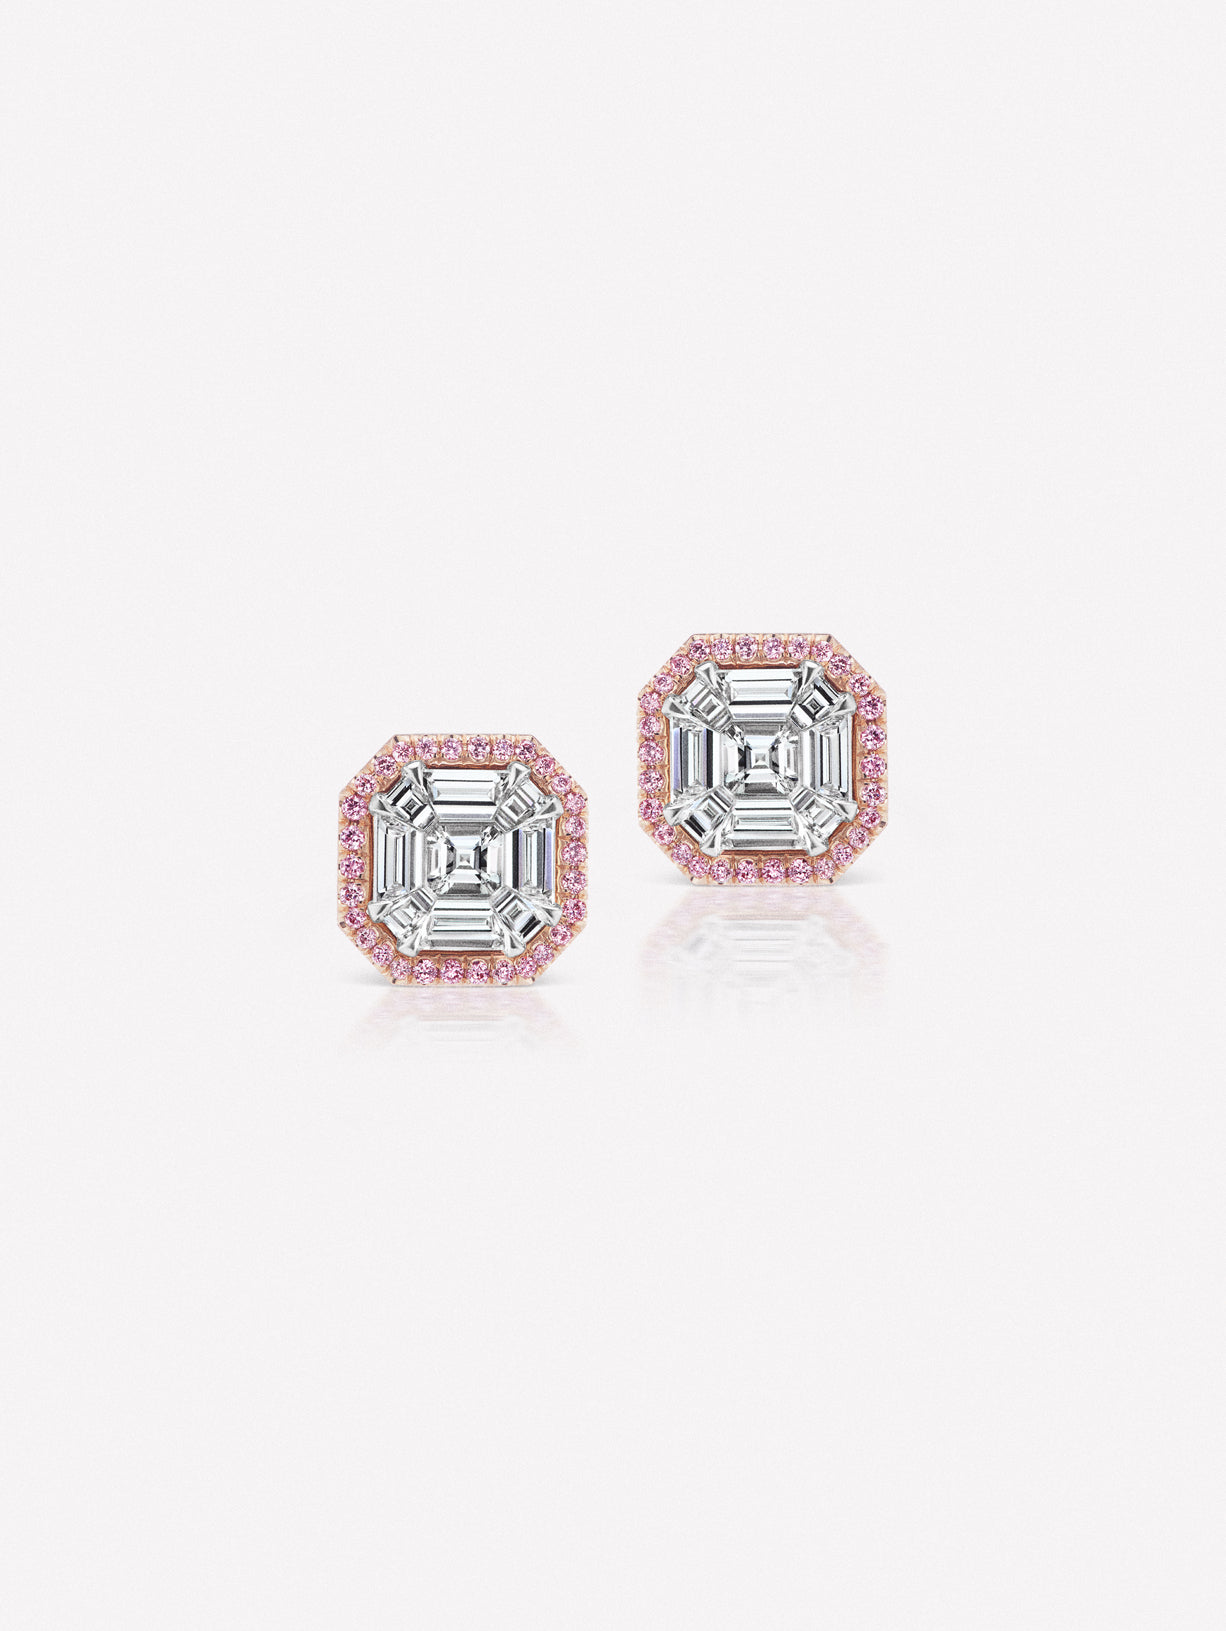 Argyle Pink™ Diamond Invisibly Set Asscher Cut Earrings - Pink Diamonds, J FINE - J Fine, earrings - Pink Diamond Jewelry, argyle-pink™-diamond-invisibly-set-asscher-cut-earrings-by-j-f-i